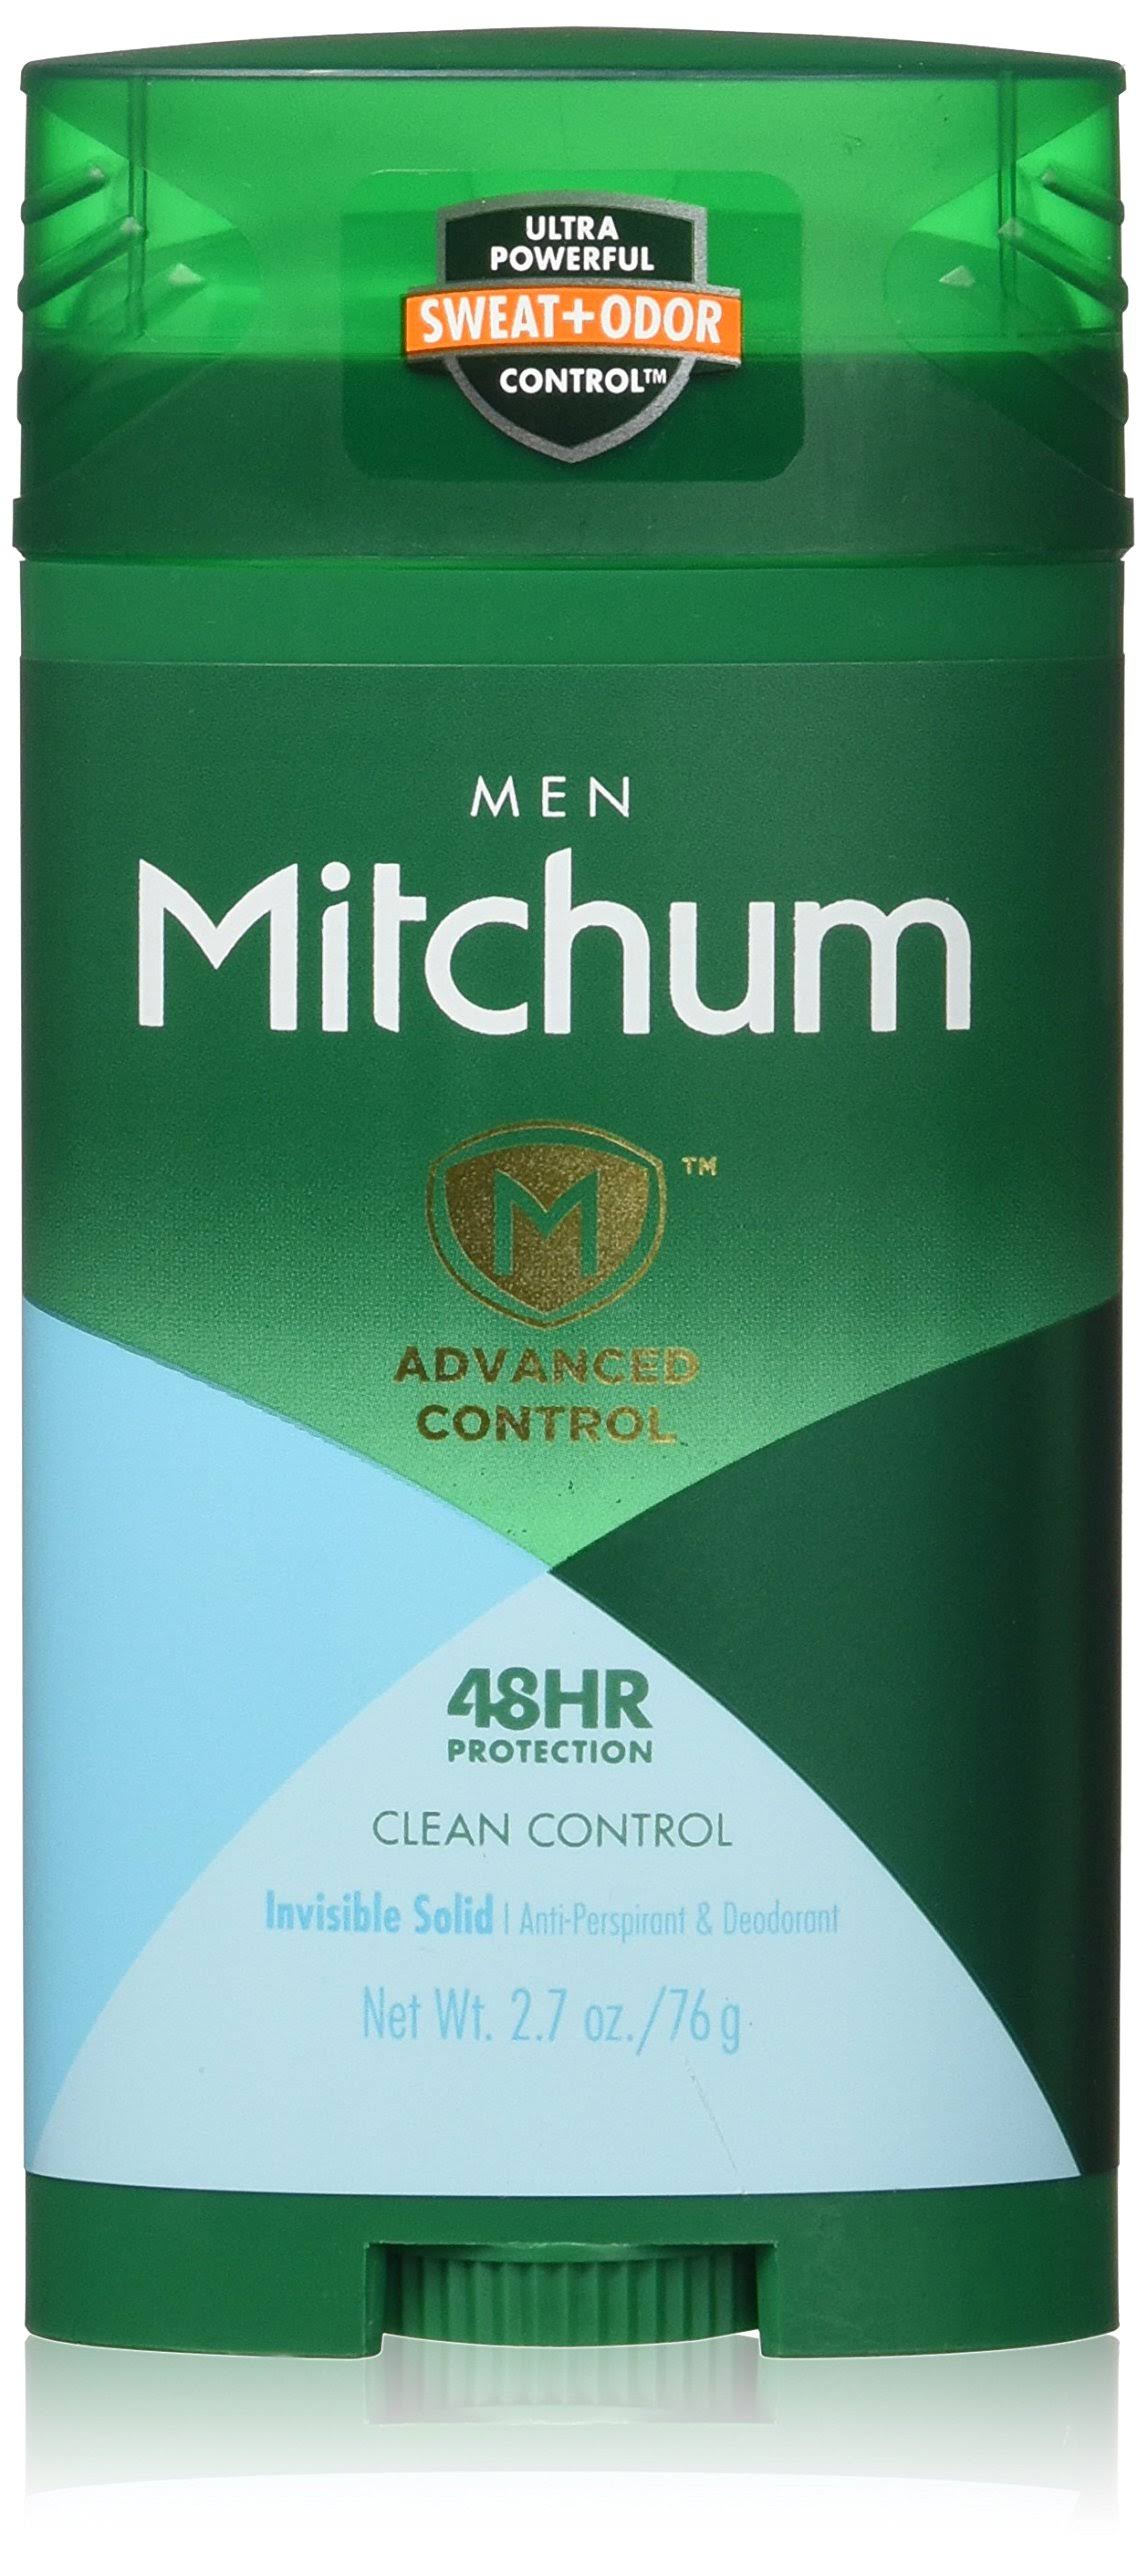 Mitchum Advanced Control Clean Control Deodorant - 2.7oz